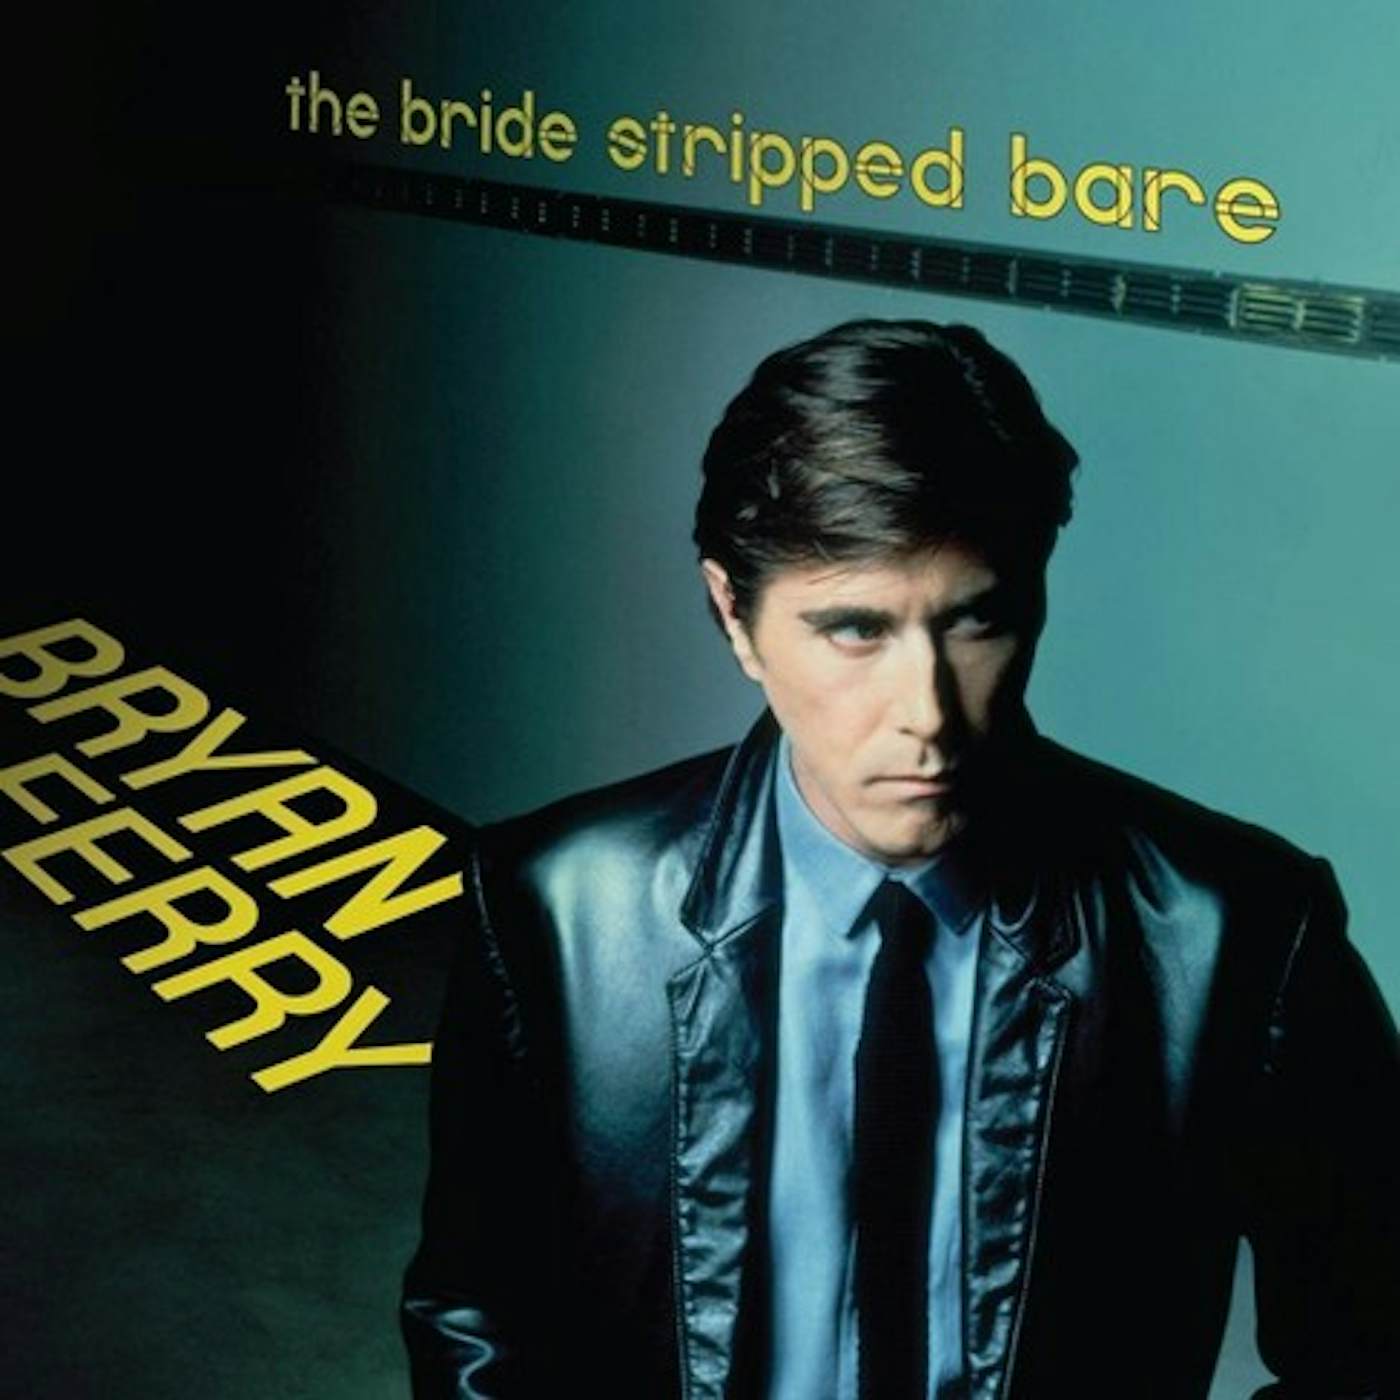 Bryan Ferry The Bride Stripped Bare Vinyl Record